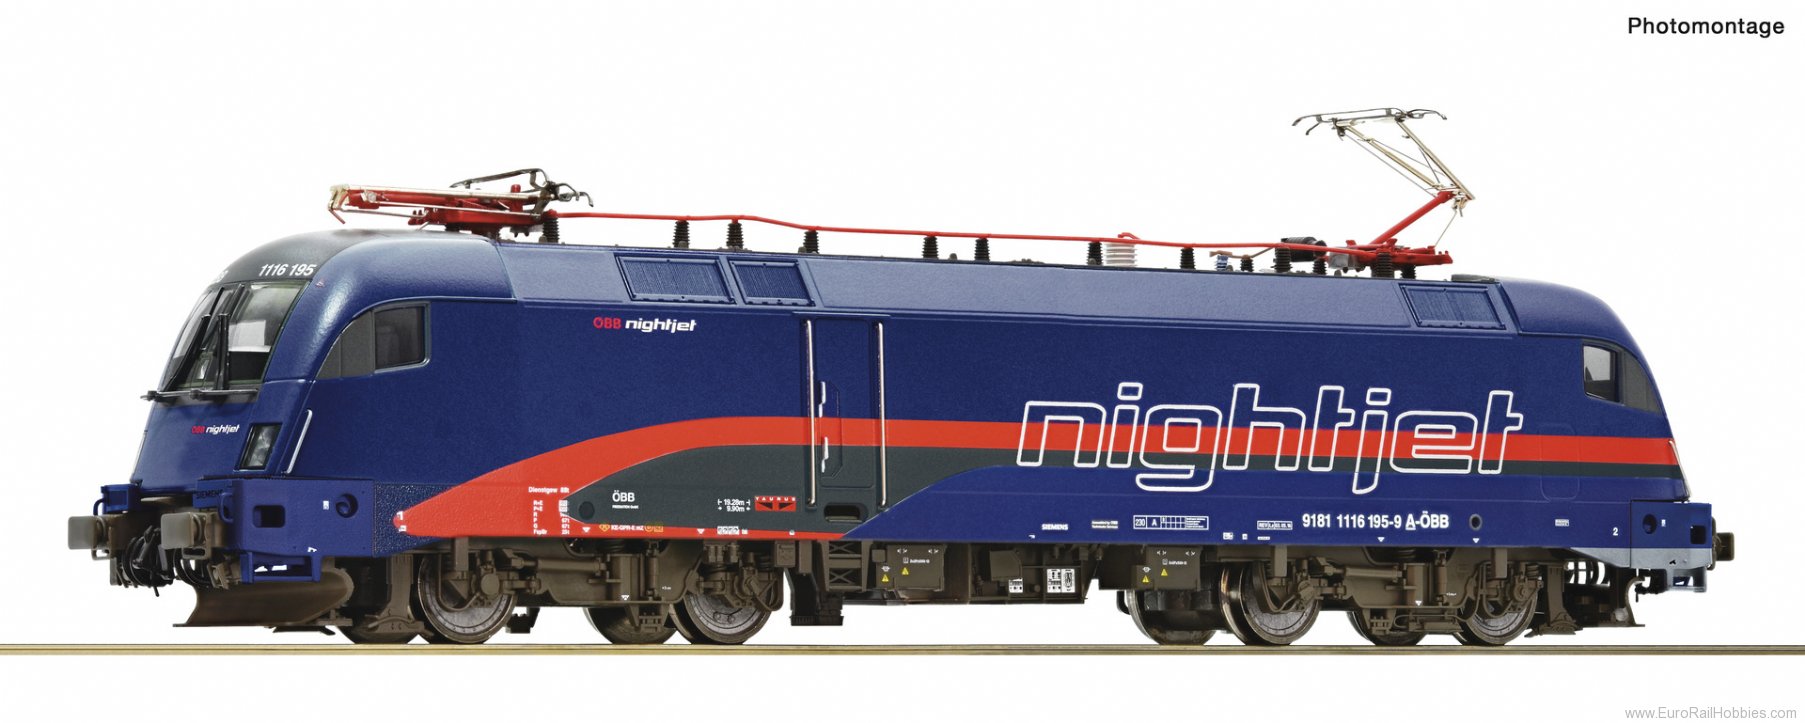 Roco 78496 Electric locomotive 1116 195-9 Nightjet, Ã